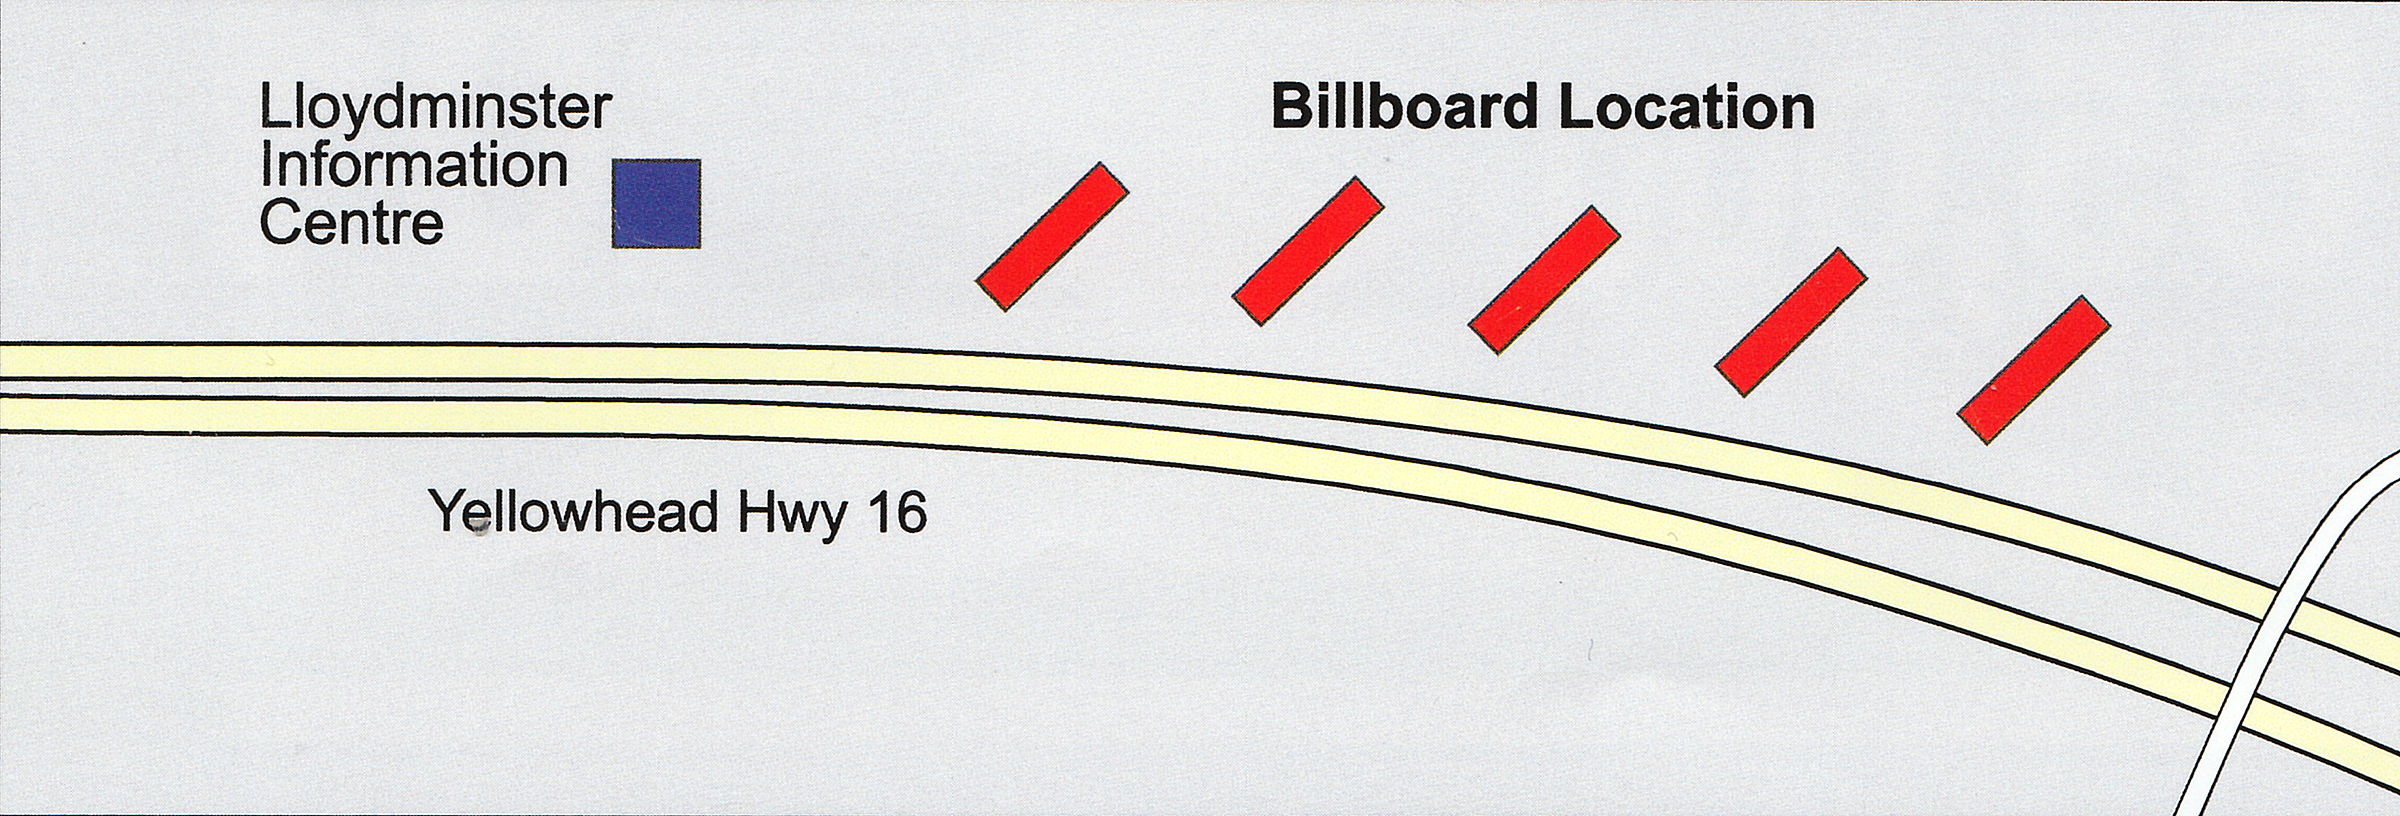 Billboard locations